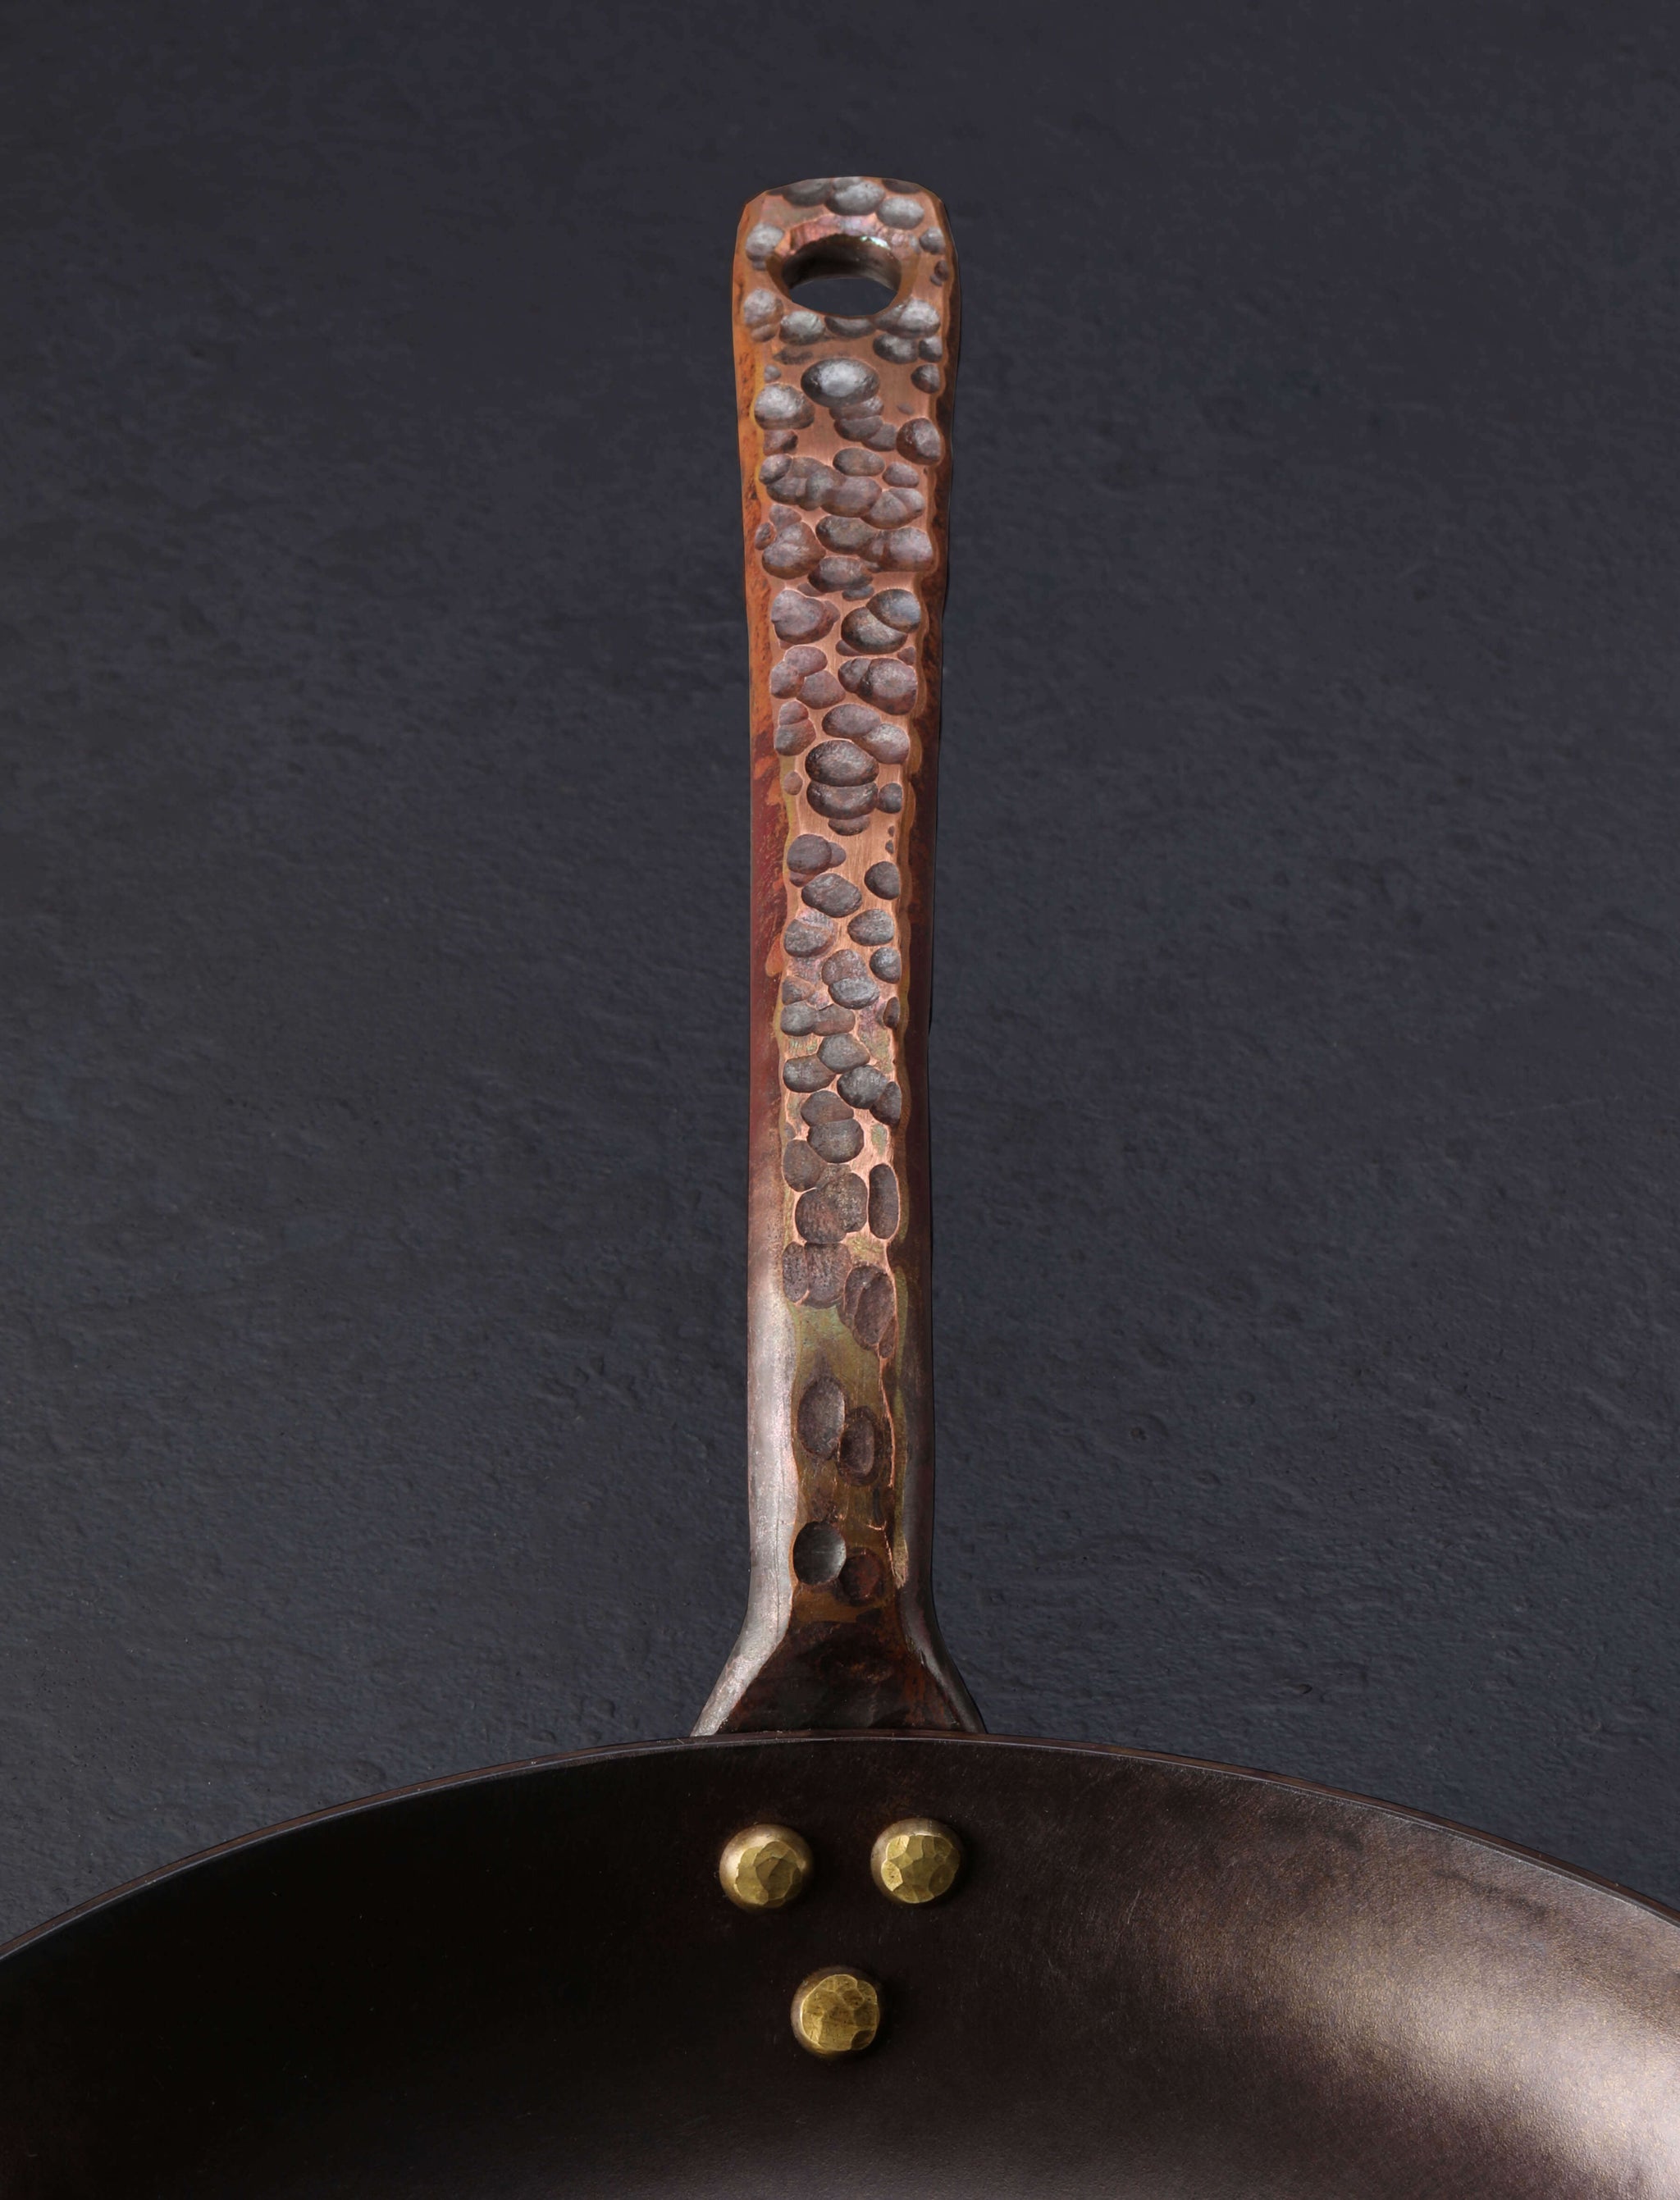 Kitchen Details Copper Frying Pan 10 inch Non-Stick, Bronze